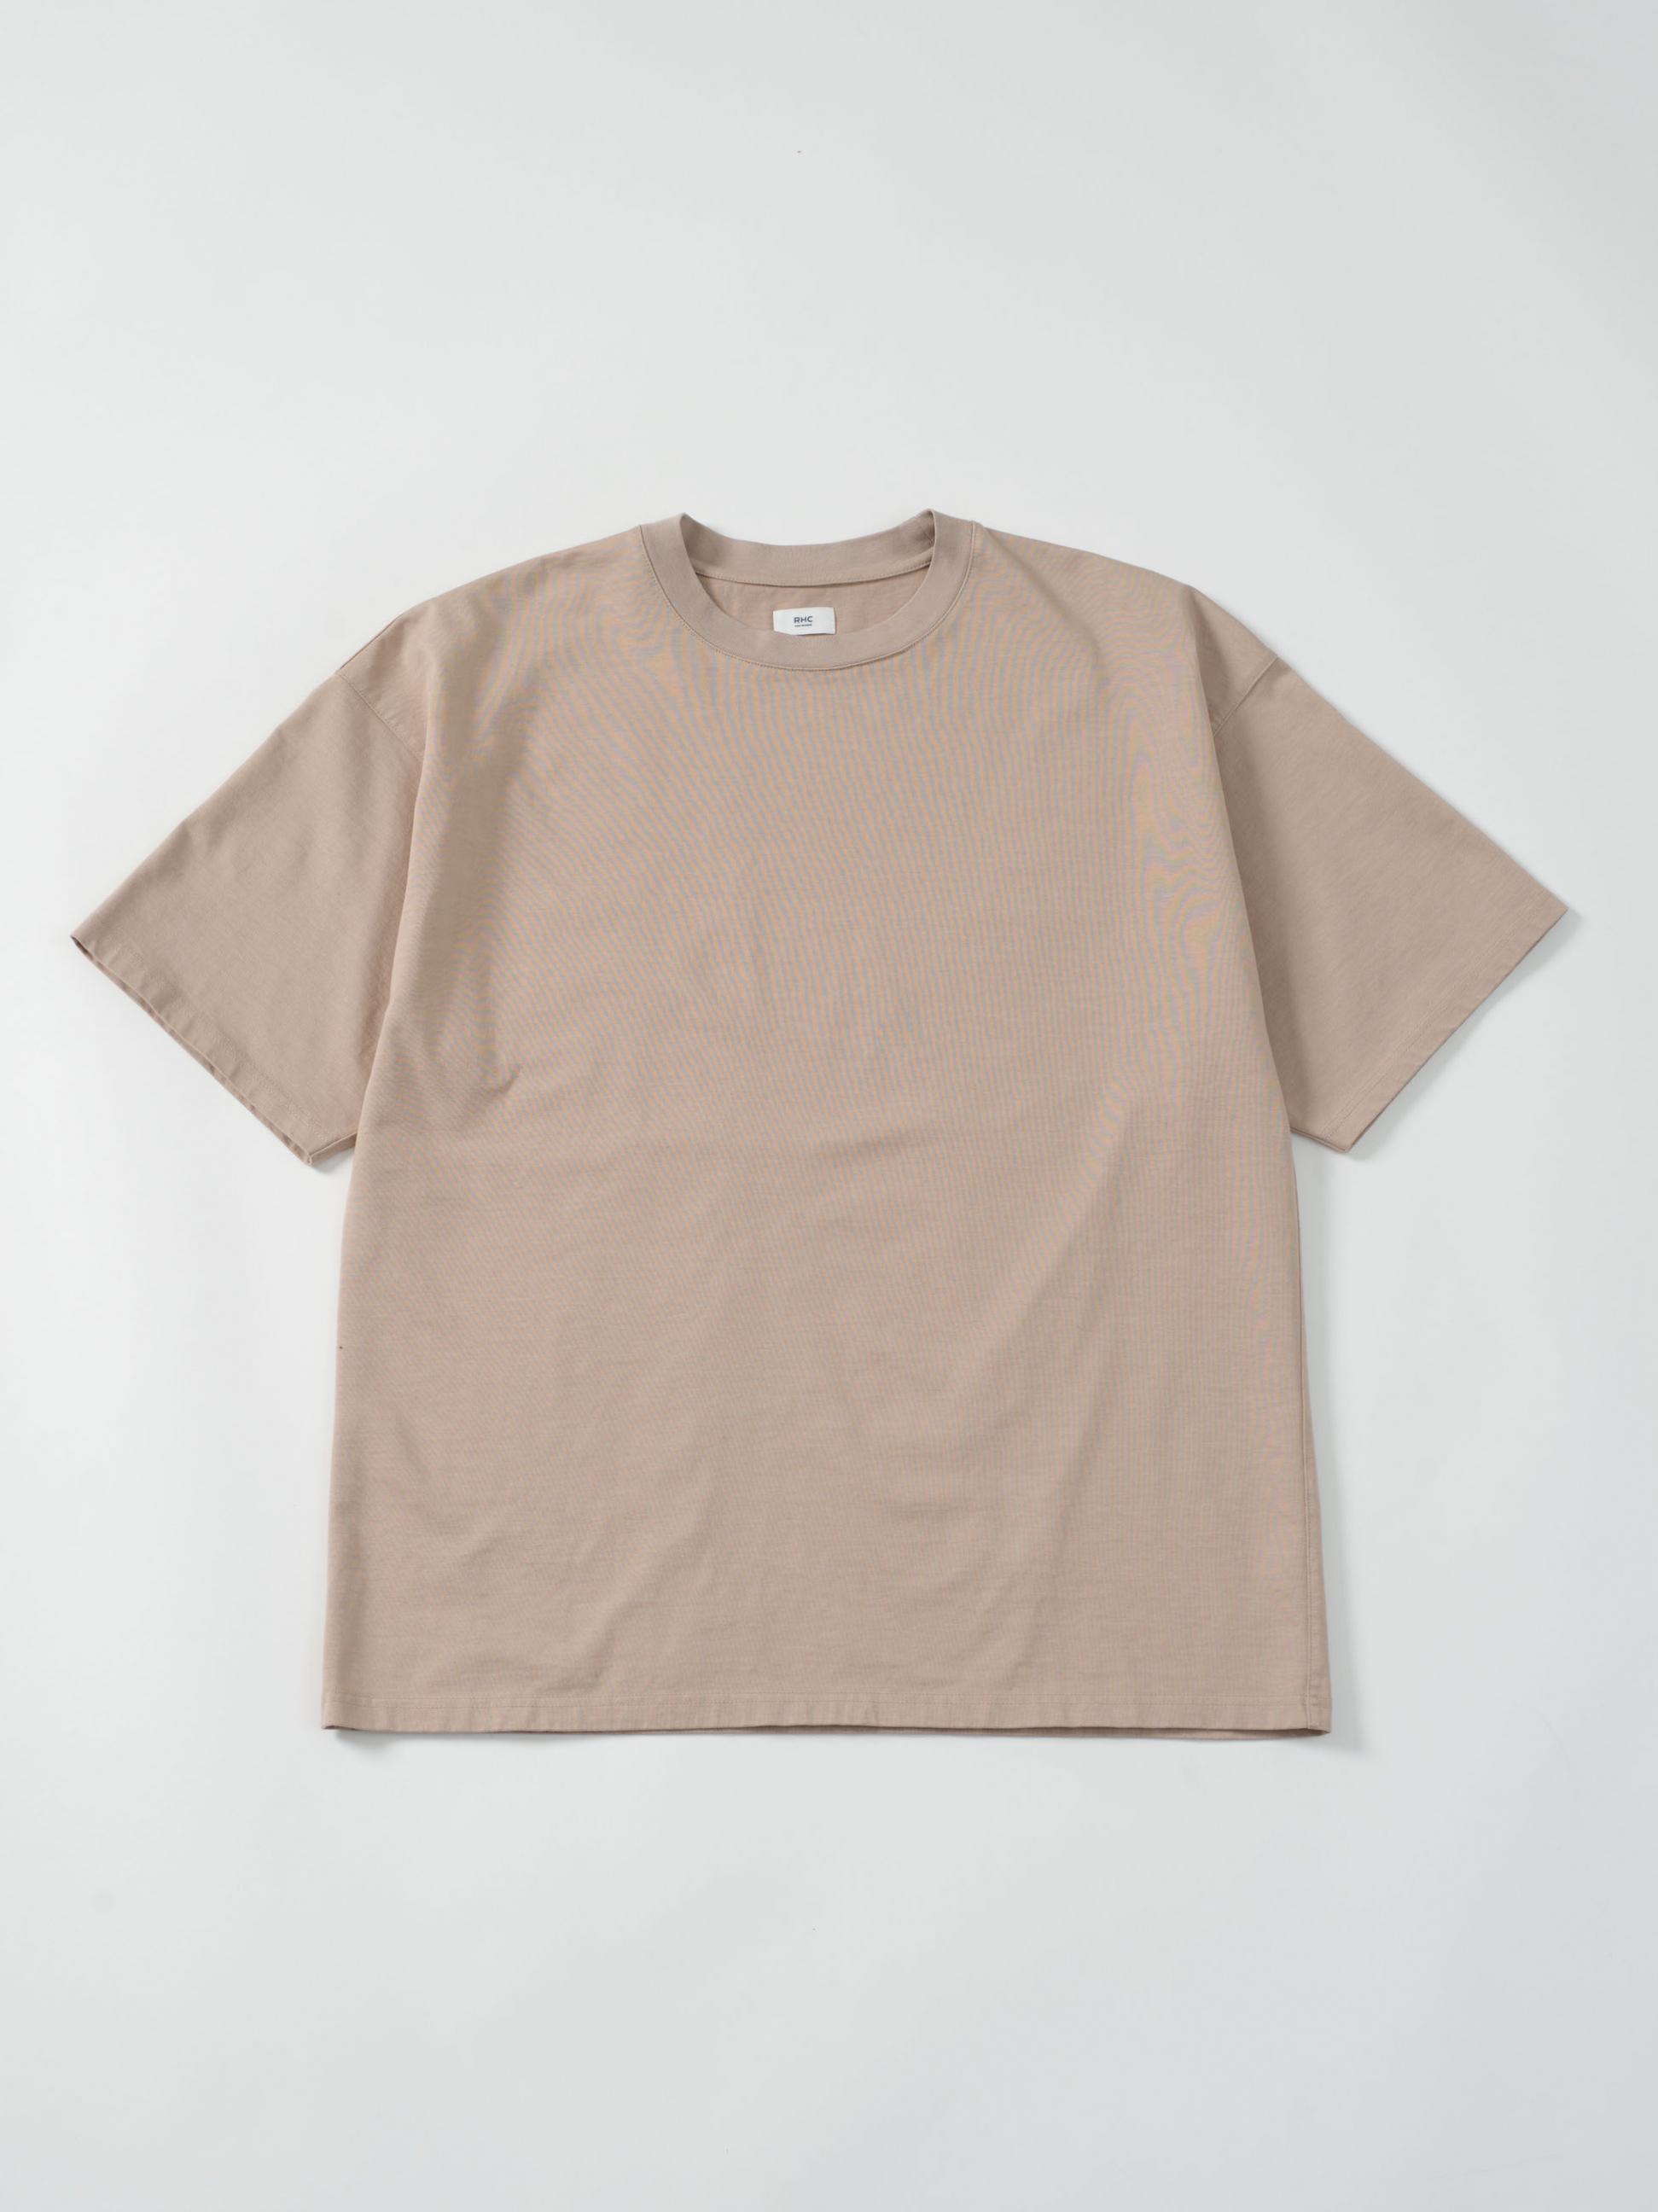 Albini
T-Shirts&Short Sleeve Shirts